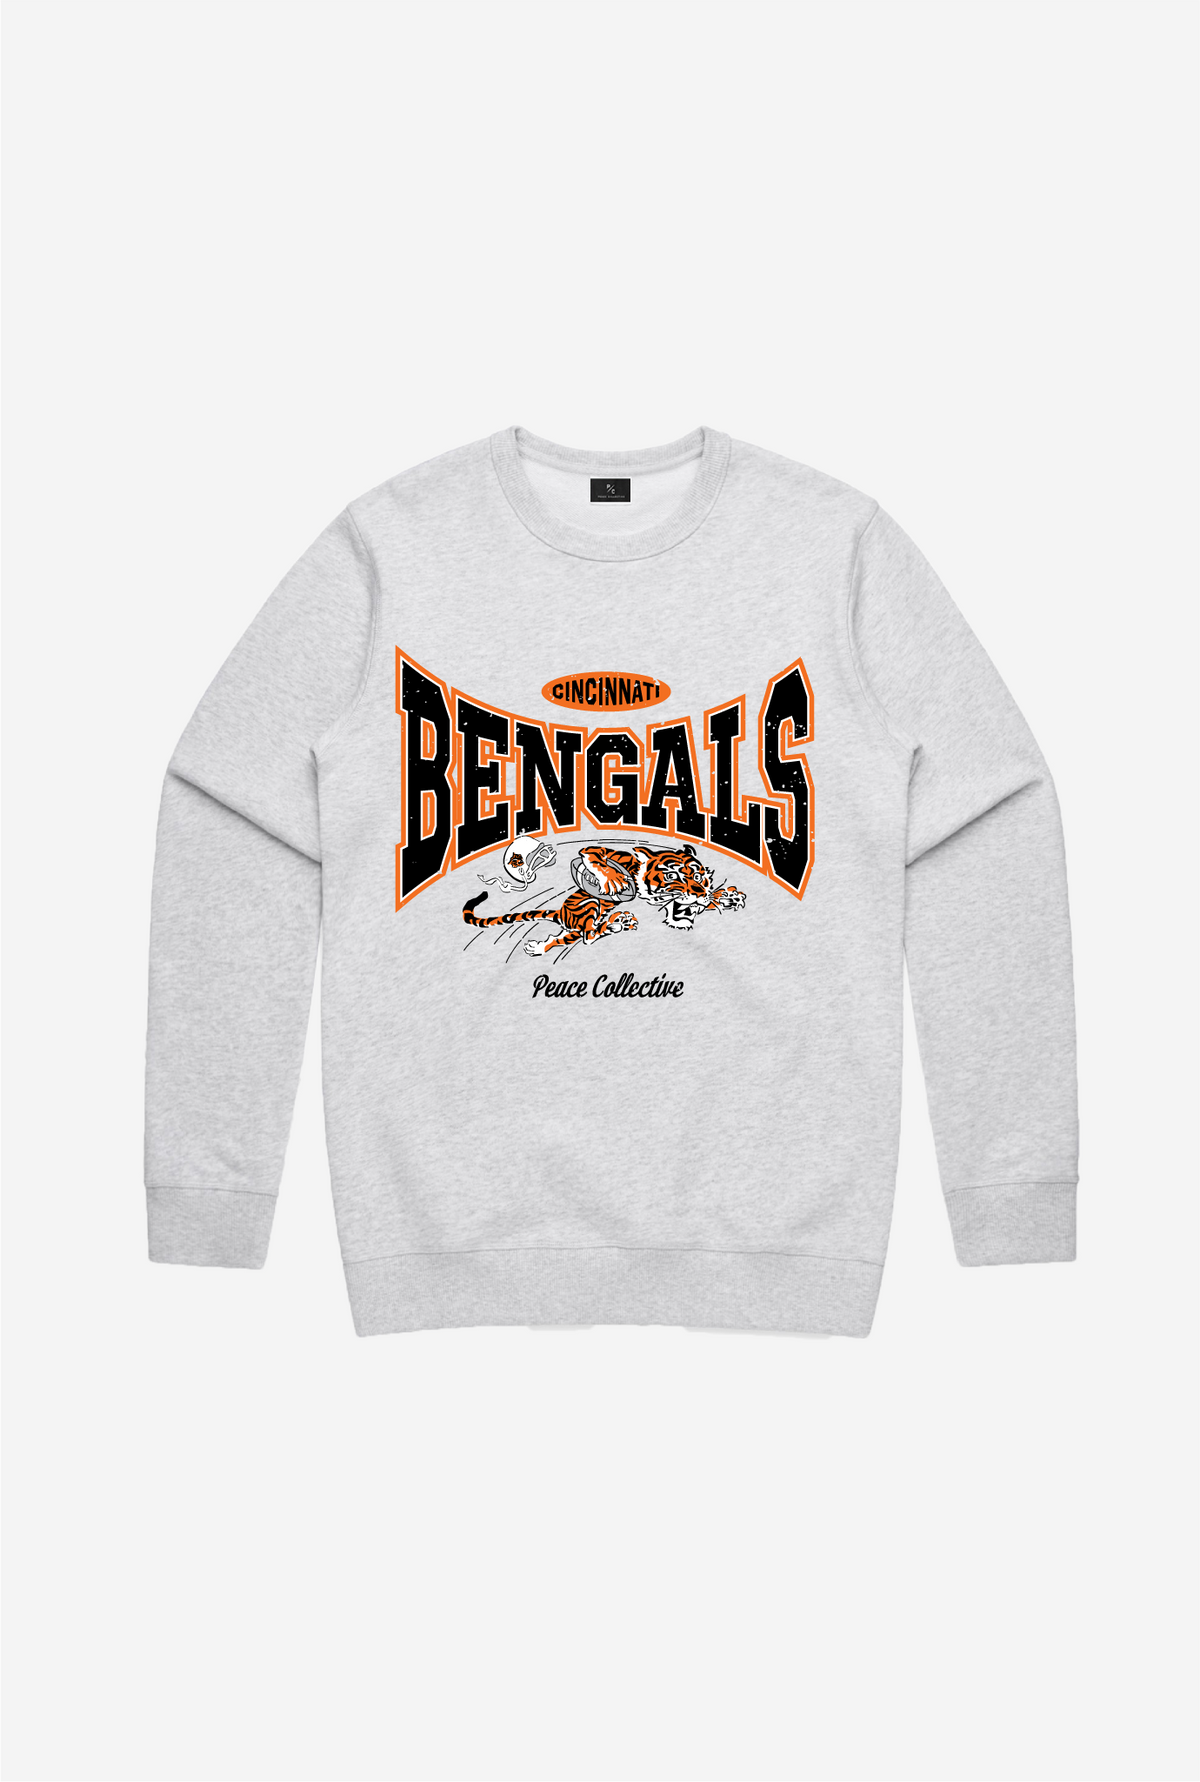 Cincinnati Bengals Washed Graphic Crewneck - Ash